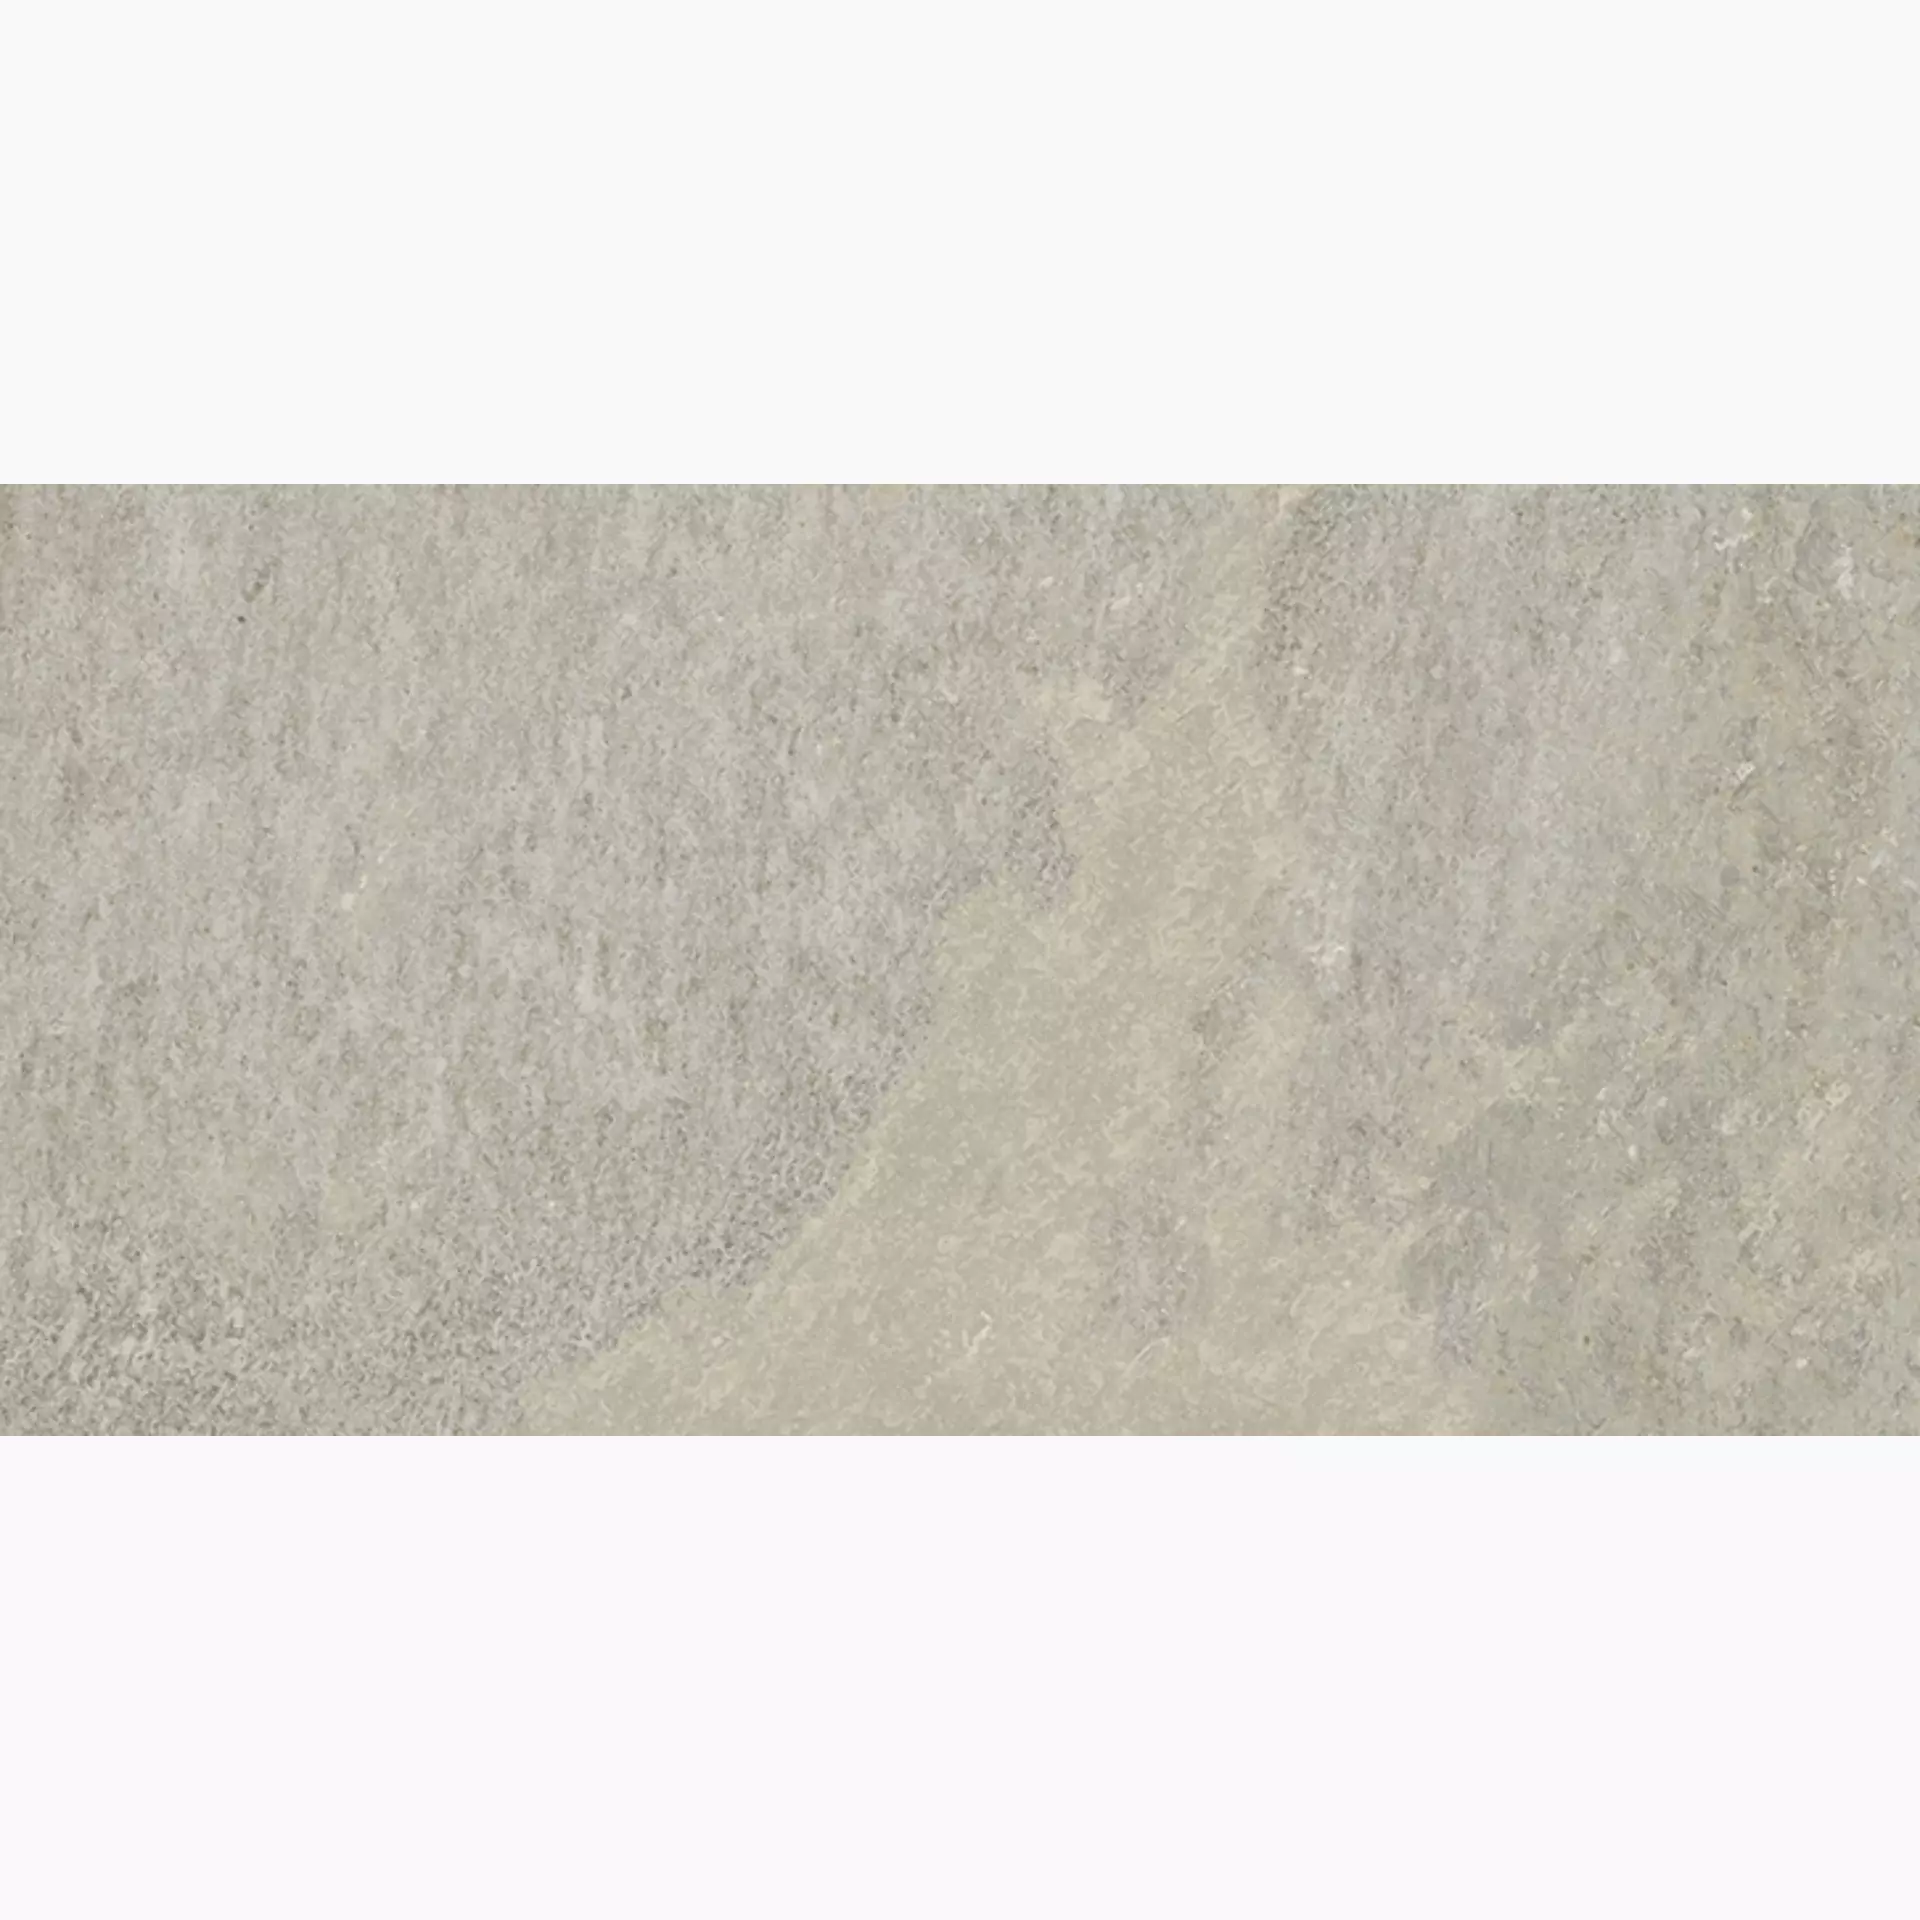 Sichenia Pave' Quarz Esterno Argento Grip 0006227 30x60cm rektifiziert 10mm